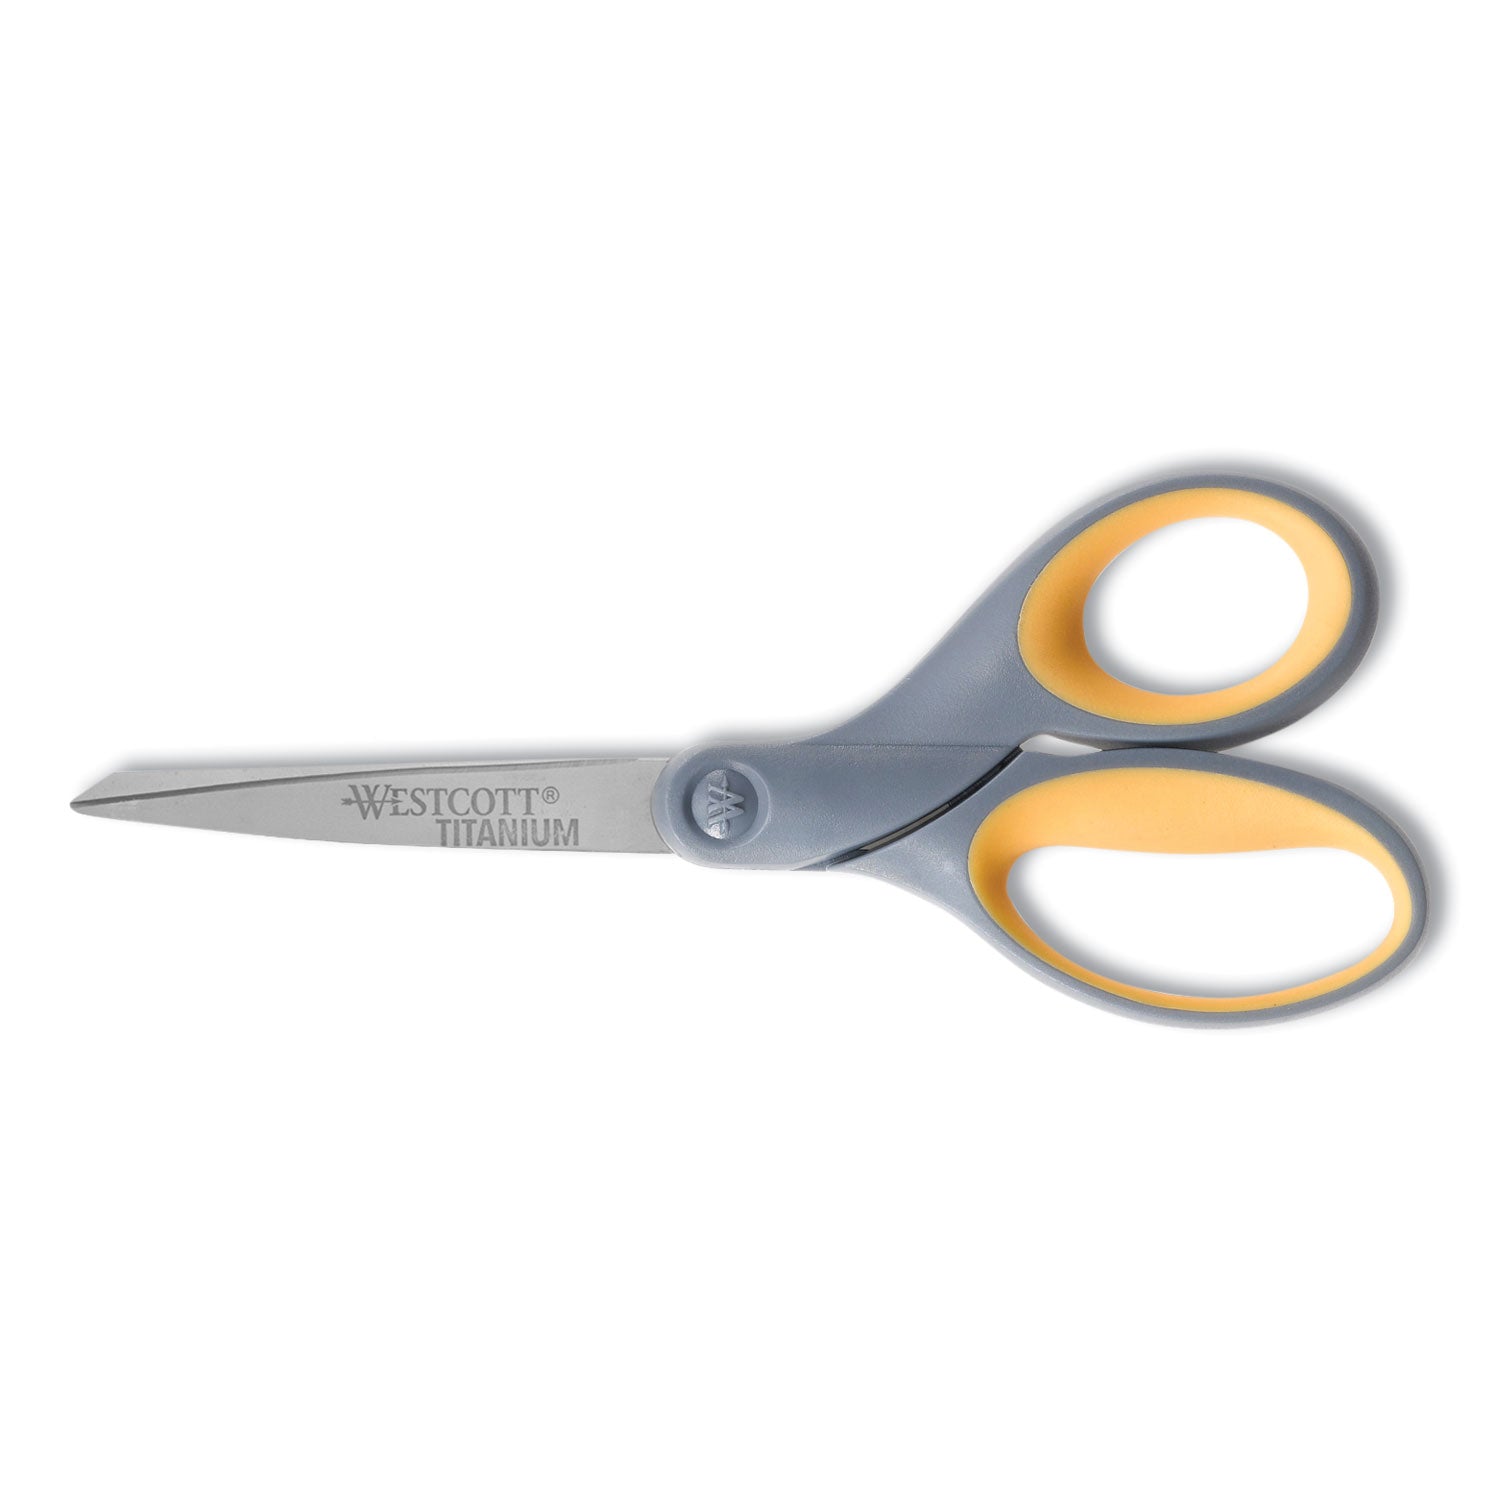 Titanium Bonded Scissors, 7" Long, 3" Cut Length, Gray/Yellow Straight Handle - 